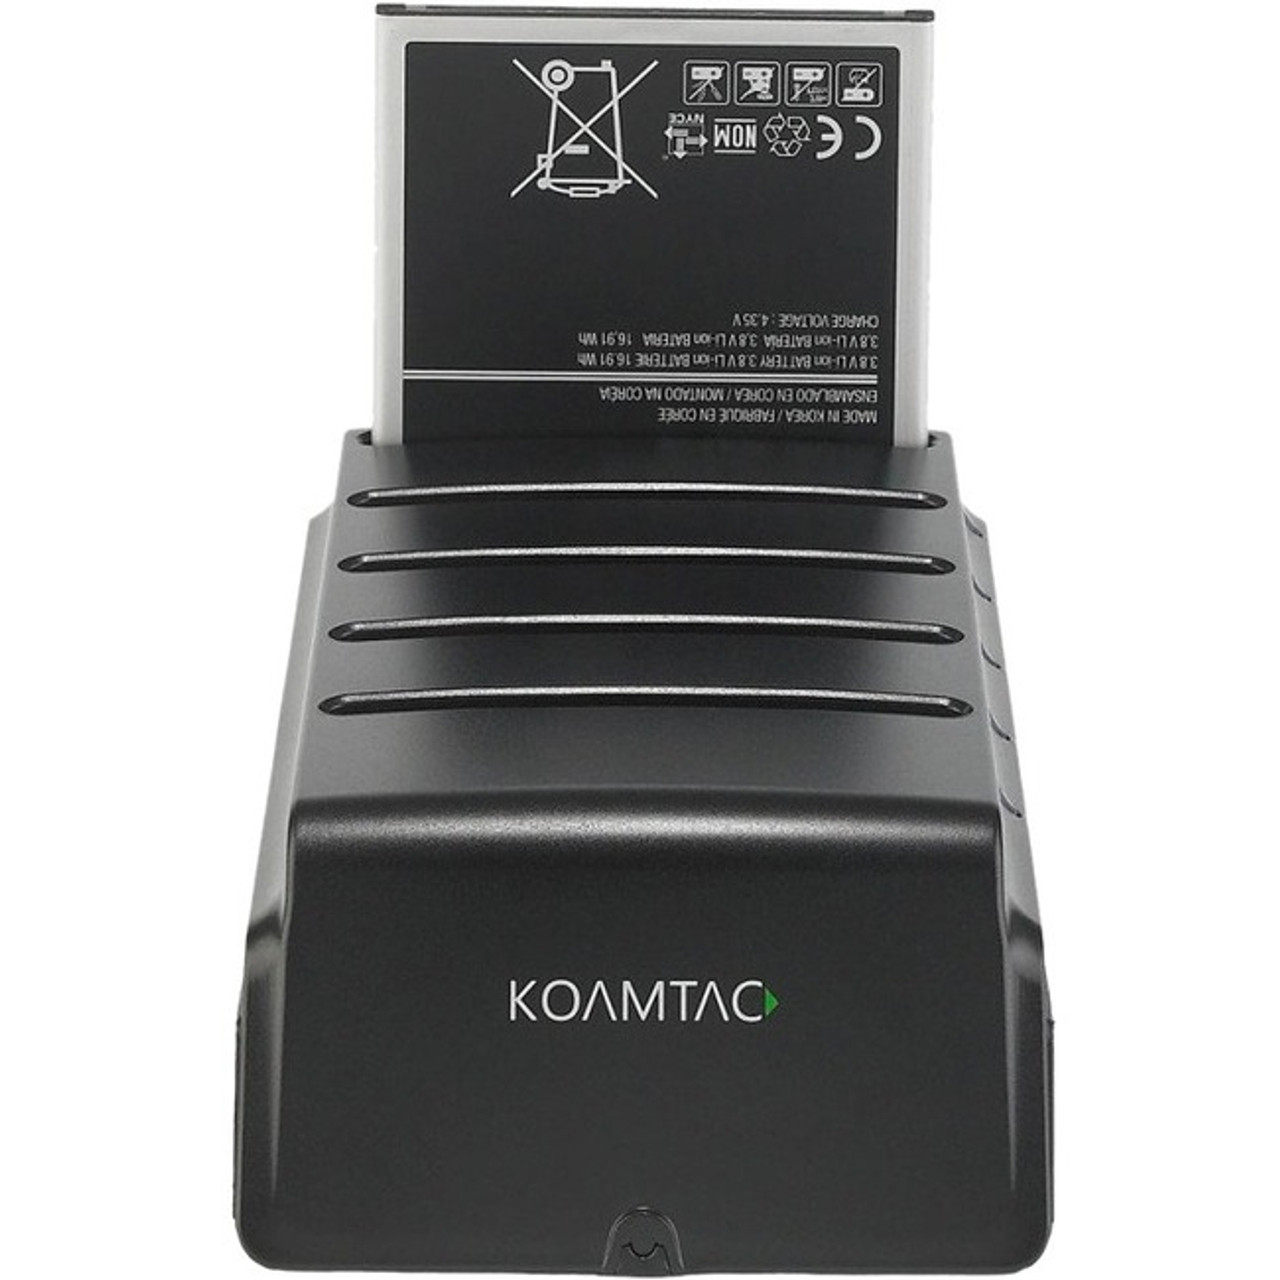 KoamTac 896024